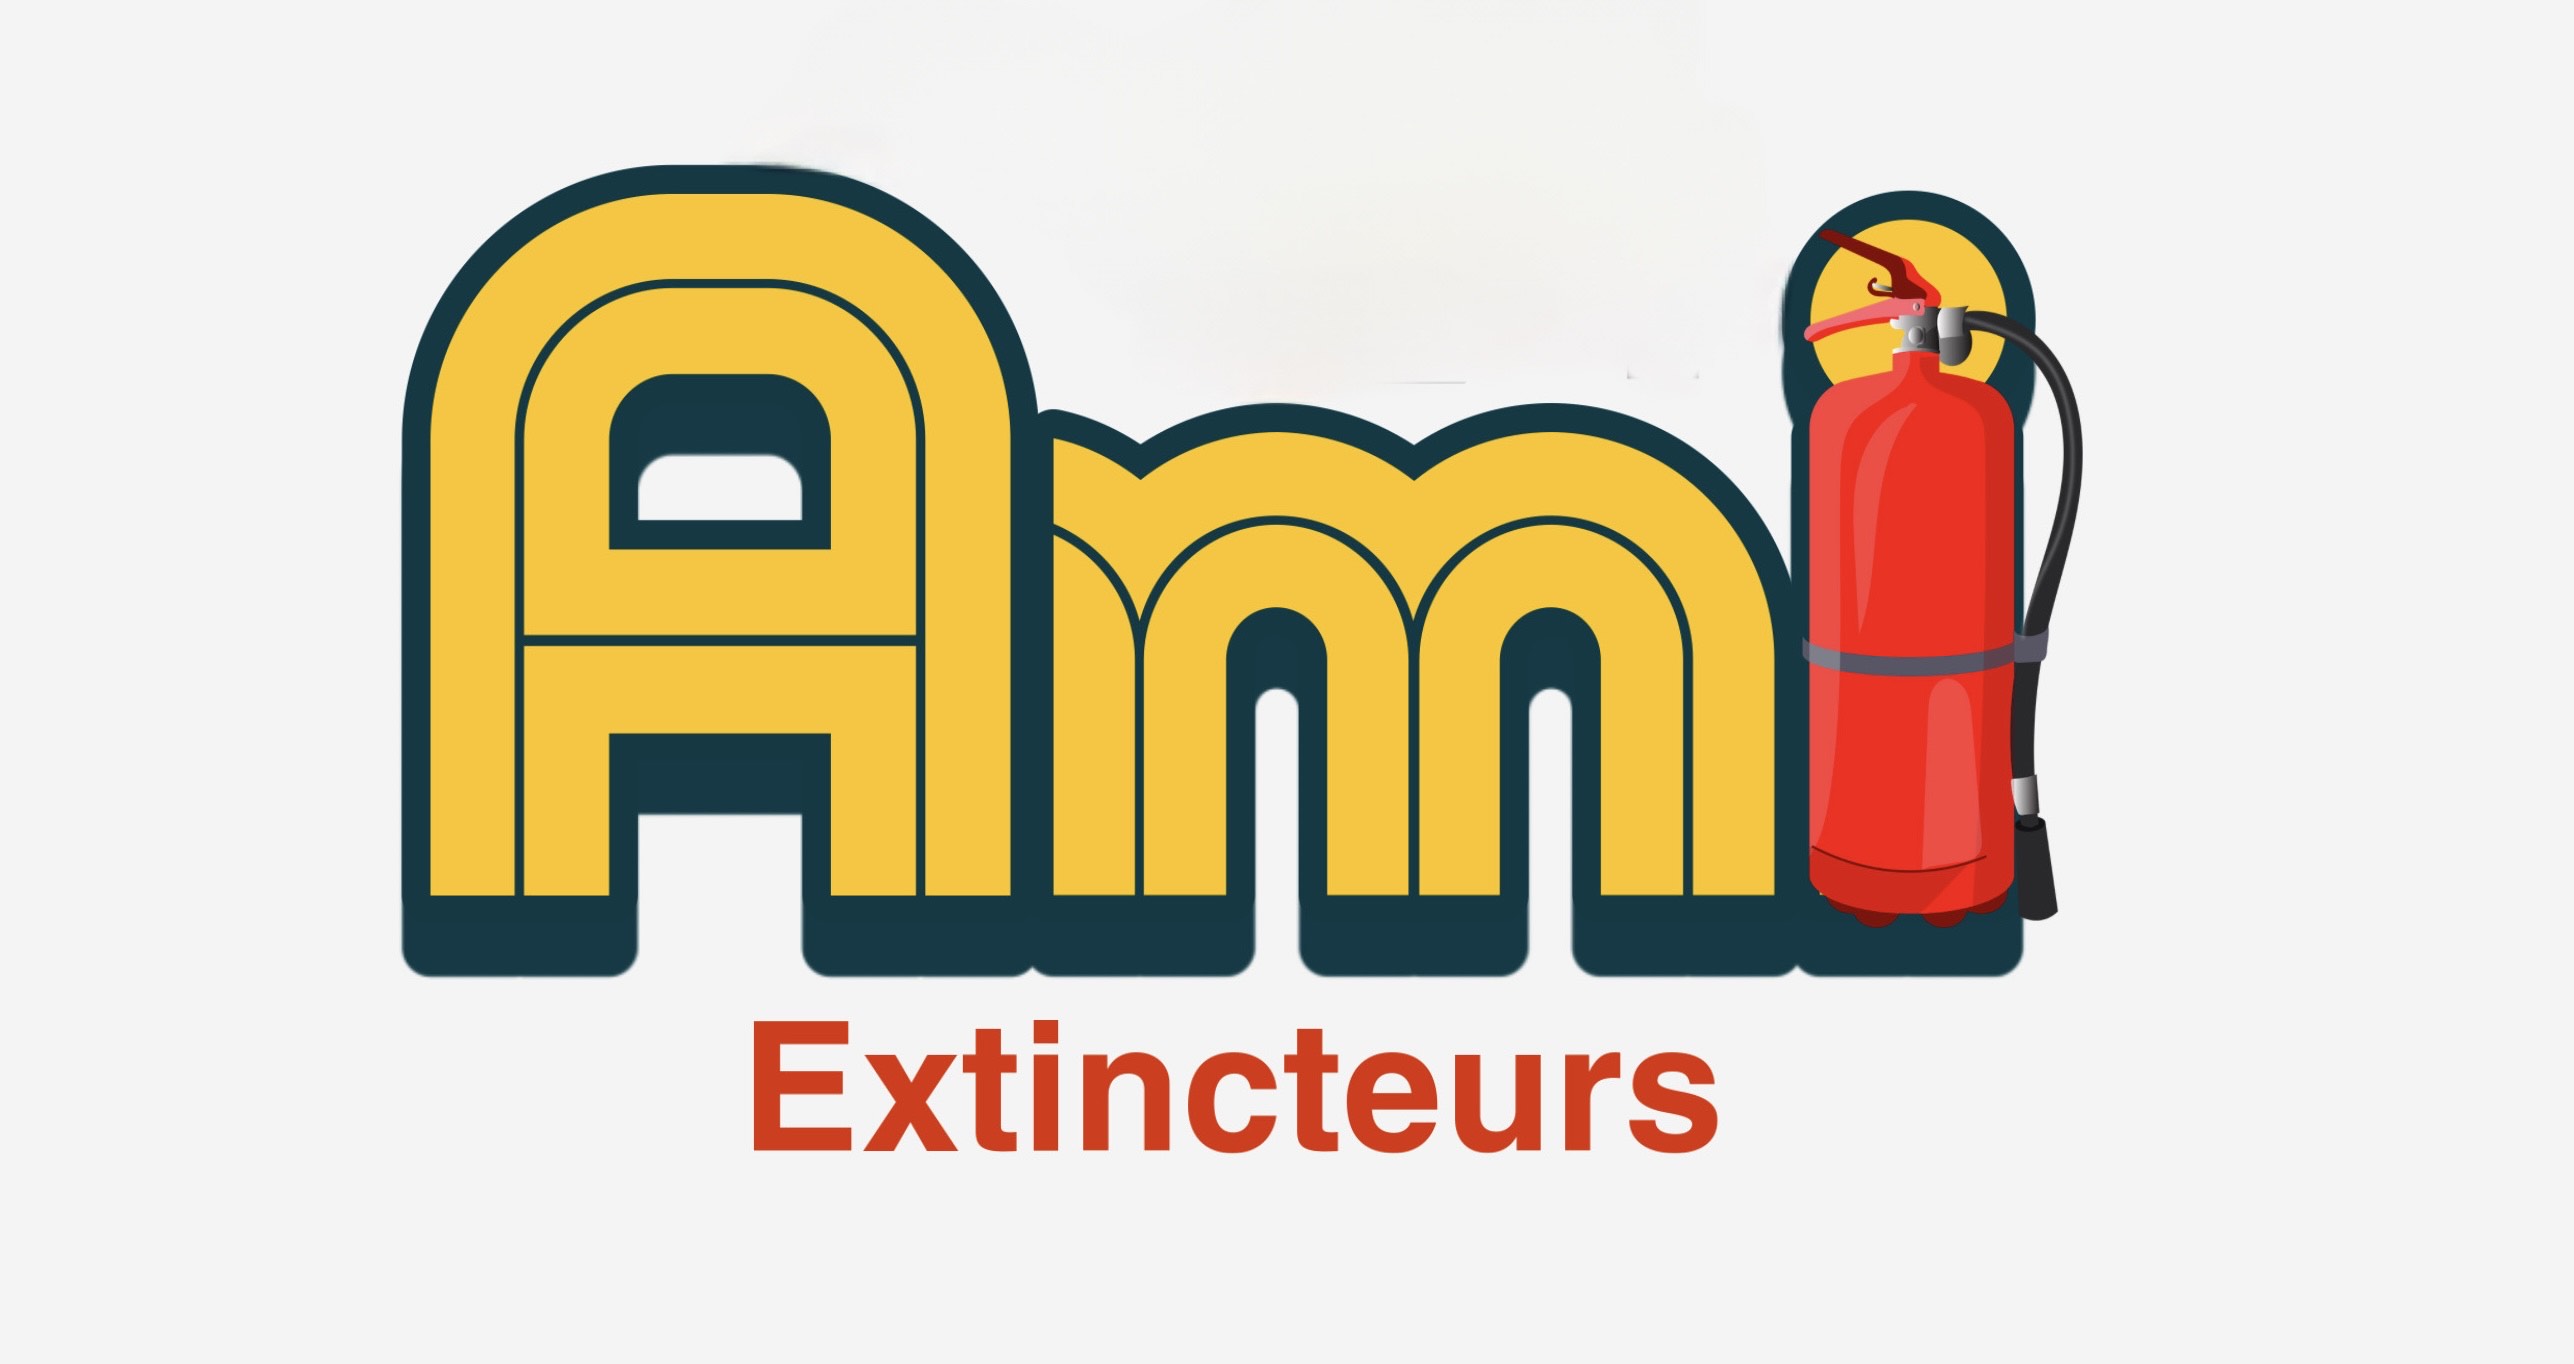 AMI logo